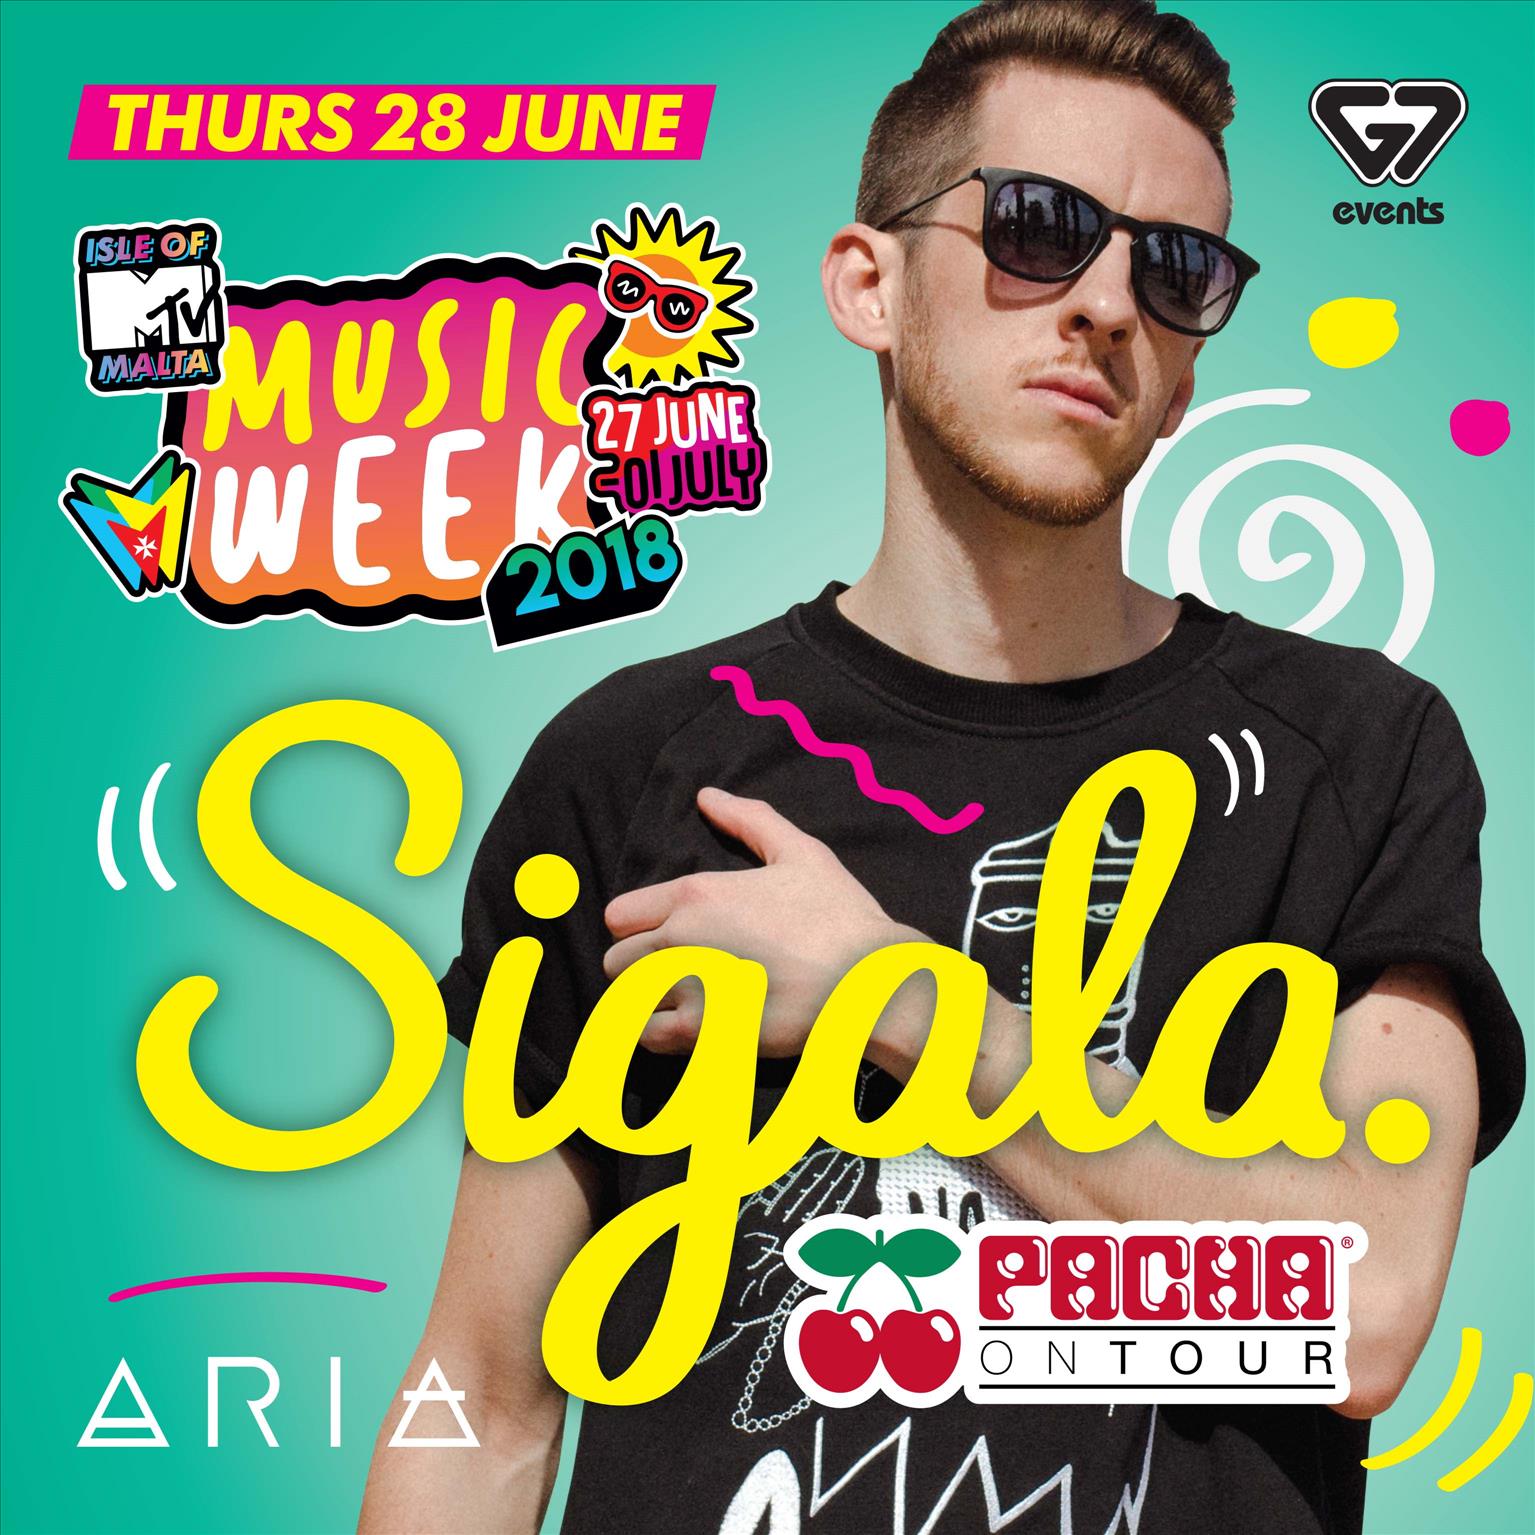 Isle of MTV Malta Music Week 2018 - PACHA on Tour ft. Sigala poster